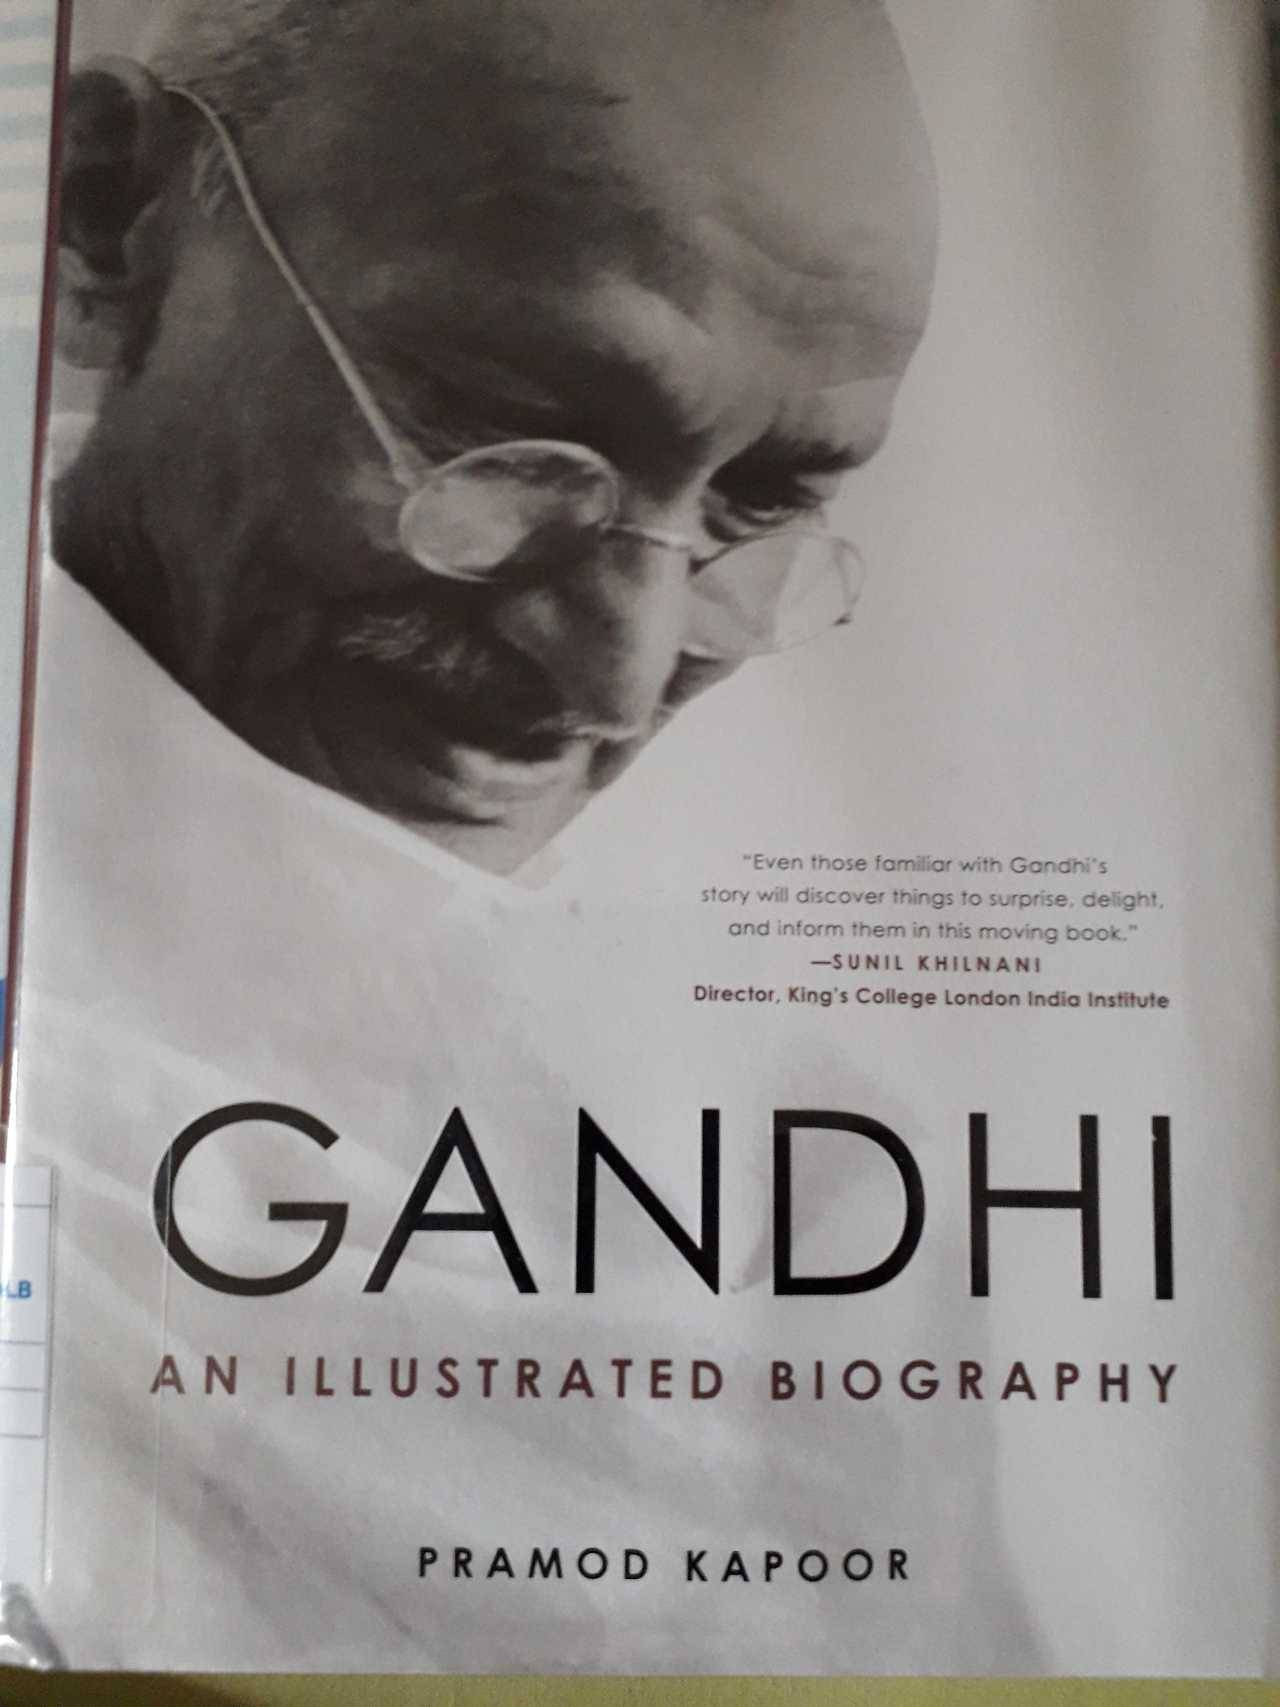 biography of mahatma gandhi book